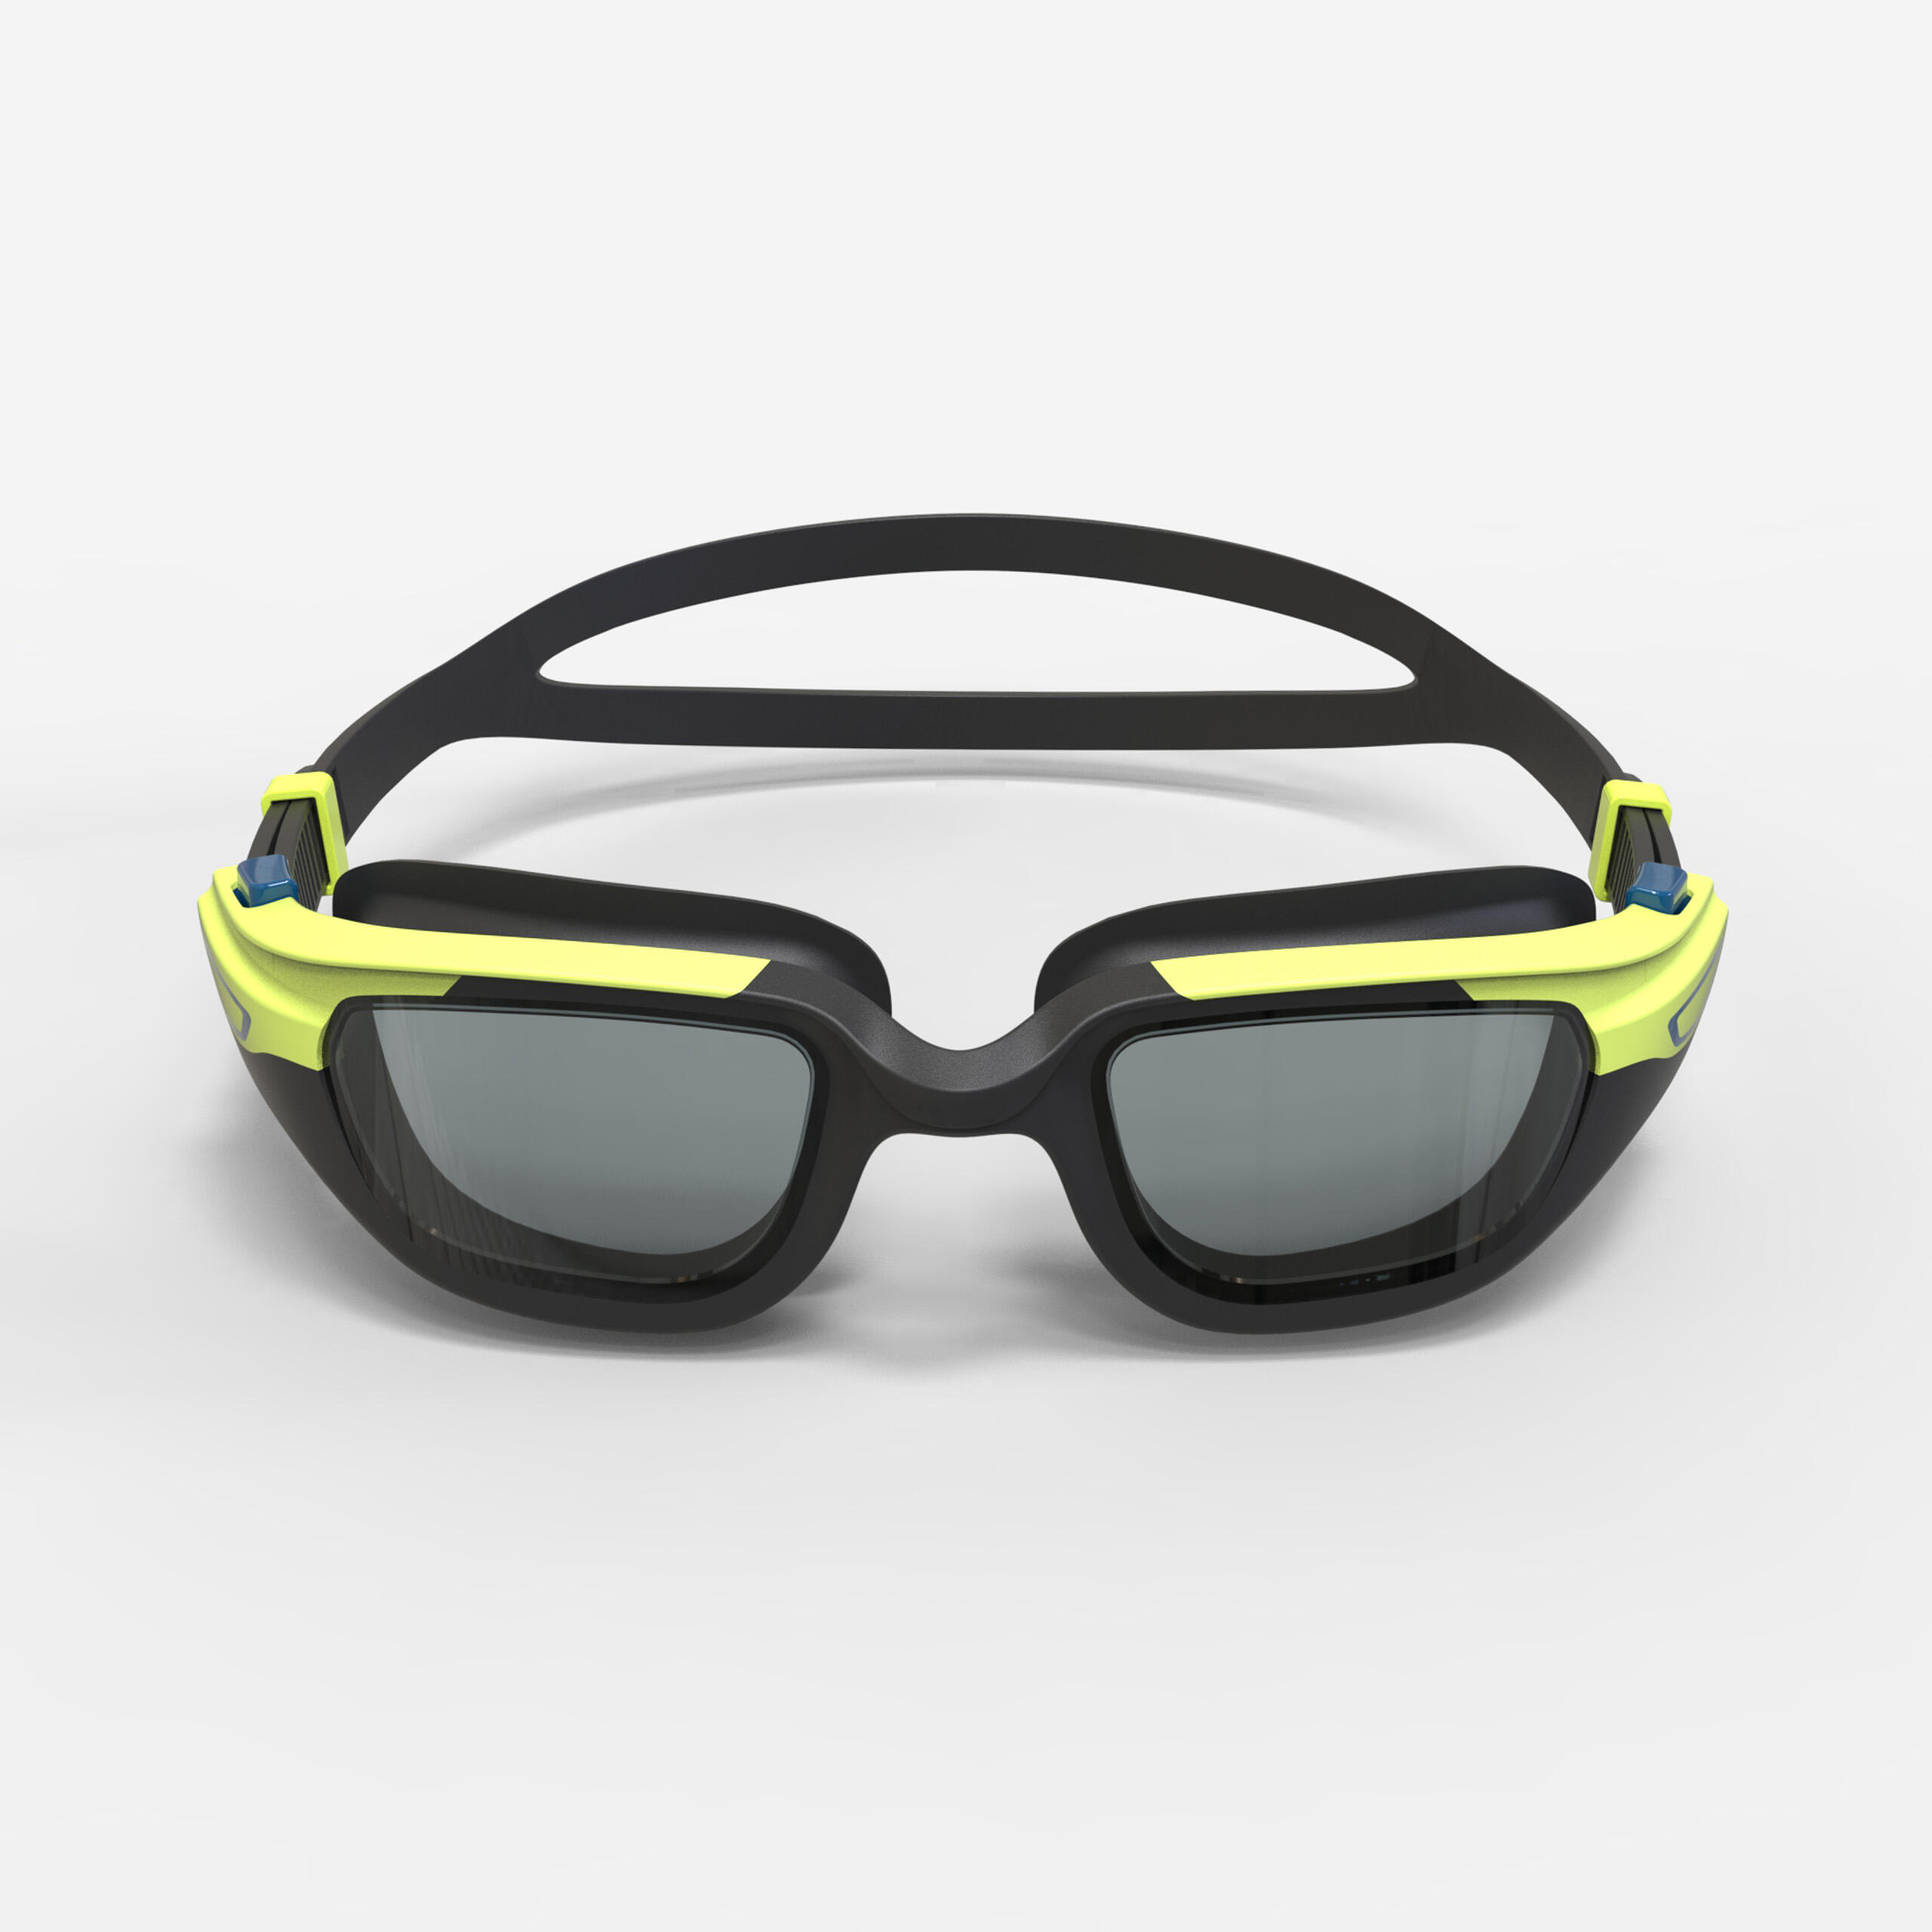 Swimming goggles SPIRIT - Smoked lenses - Size small - Black yellow 3/5